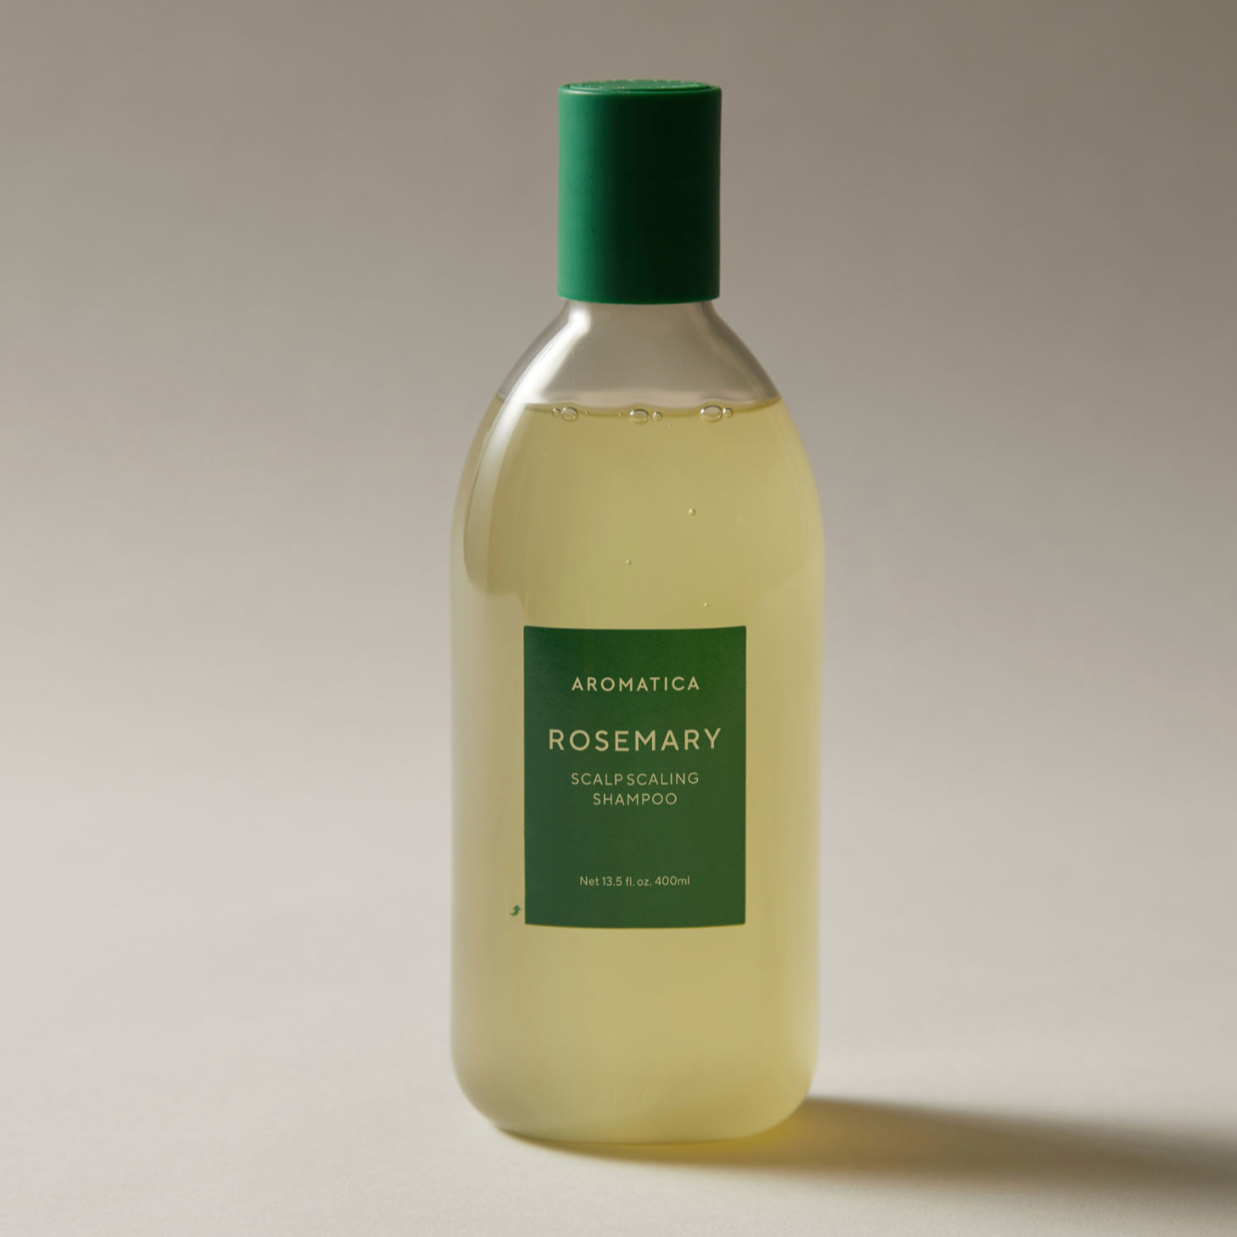 AROMATICA Rosemary Scalp Scaling Shampoo (180ml)